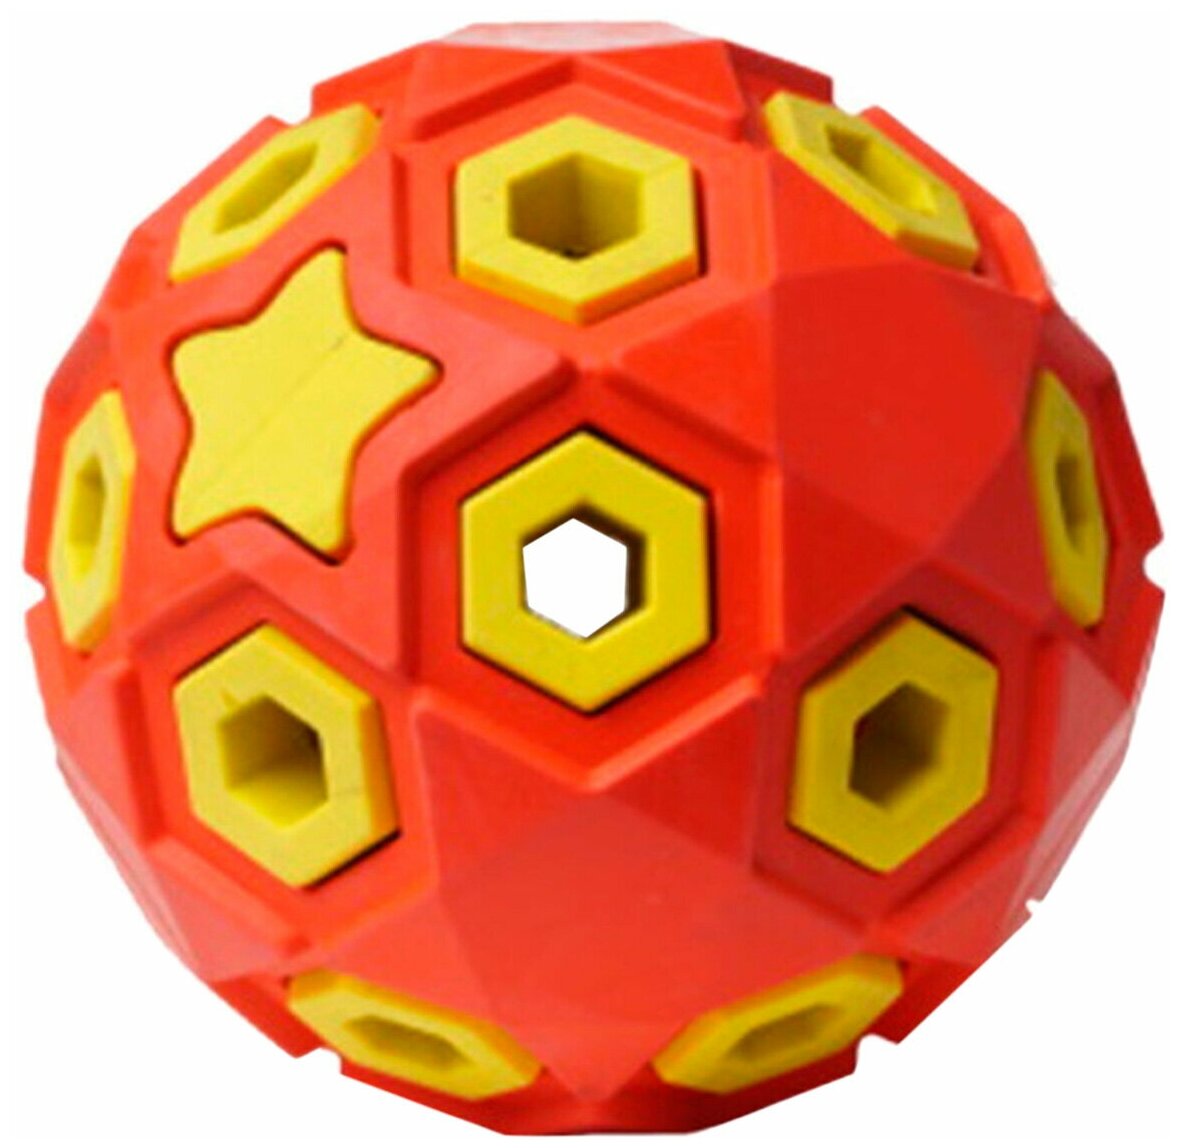 HOMEPET SILVER SERIES Ф 8 см игрушка для собак мяч звездное небо красно-желтый каучук